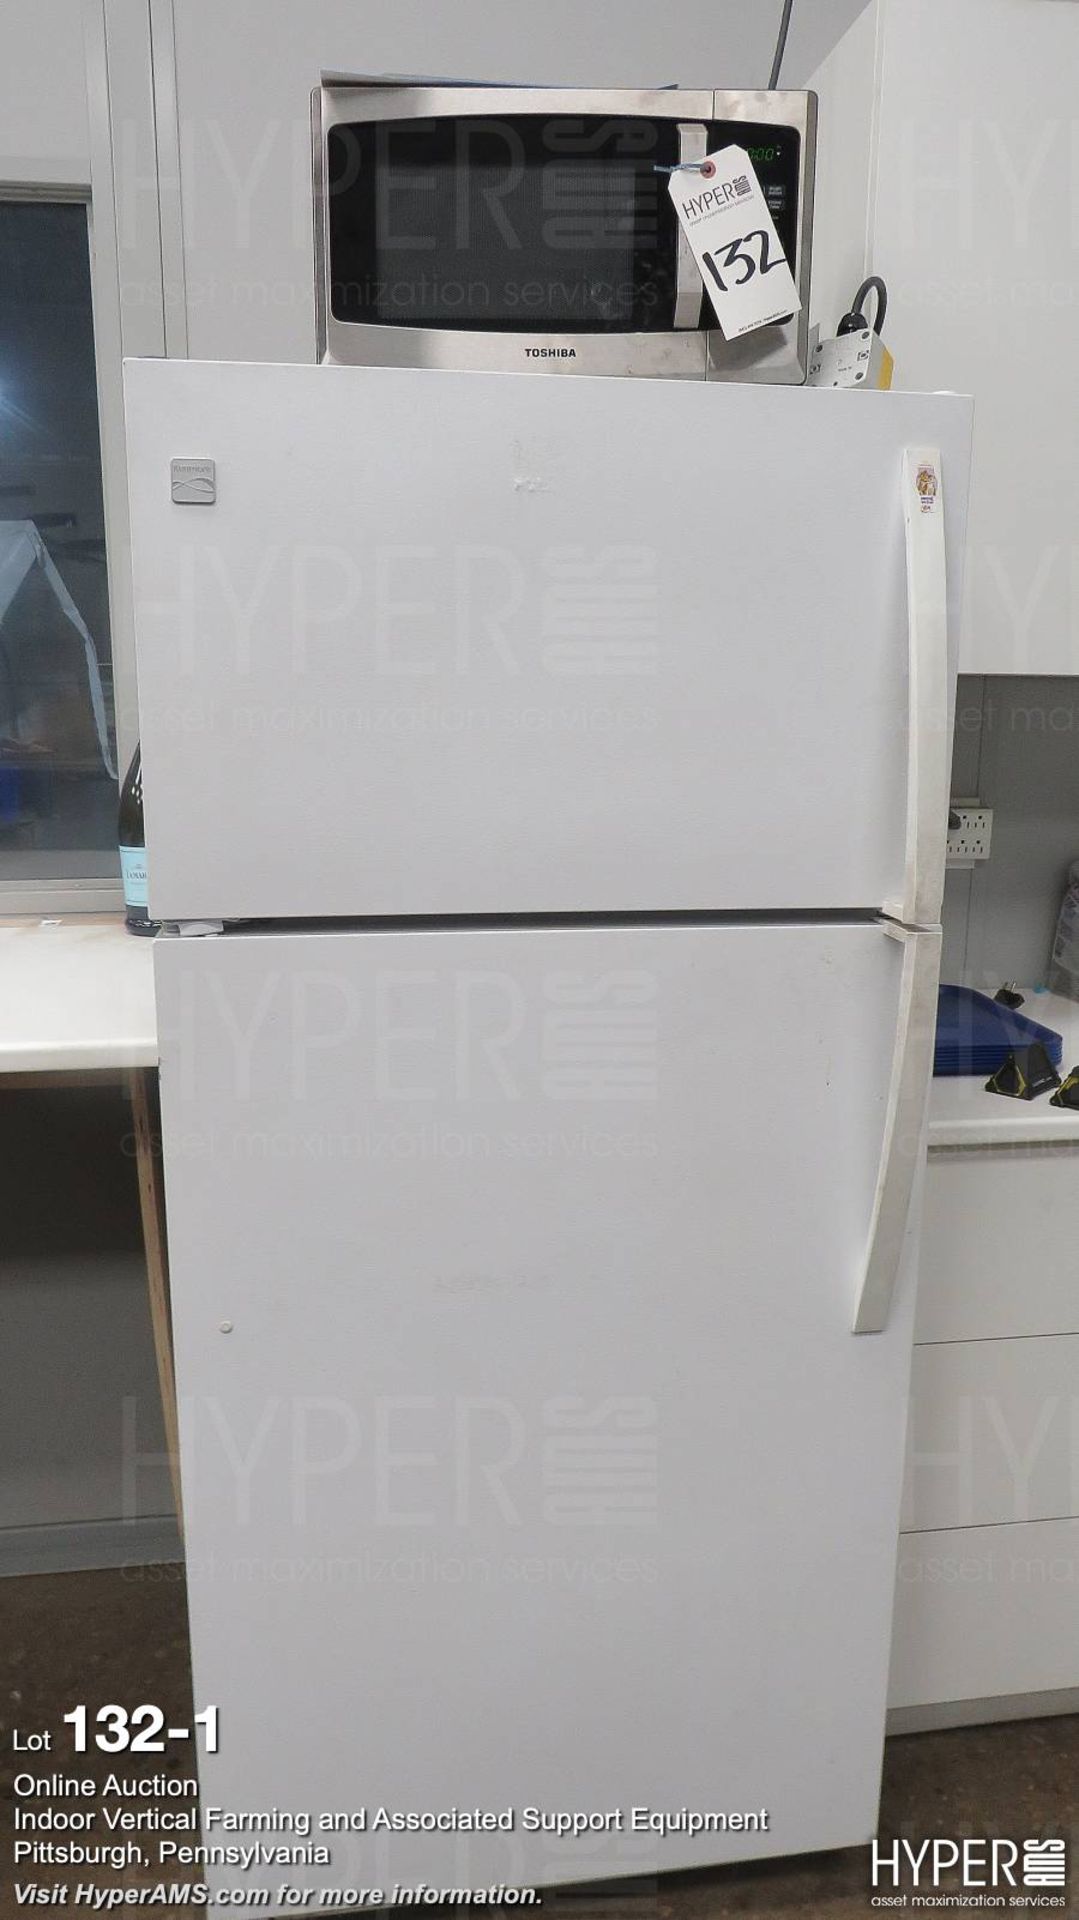 Kenmore fridge, microwave, printer, computer.